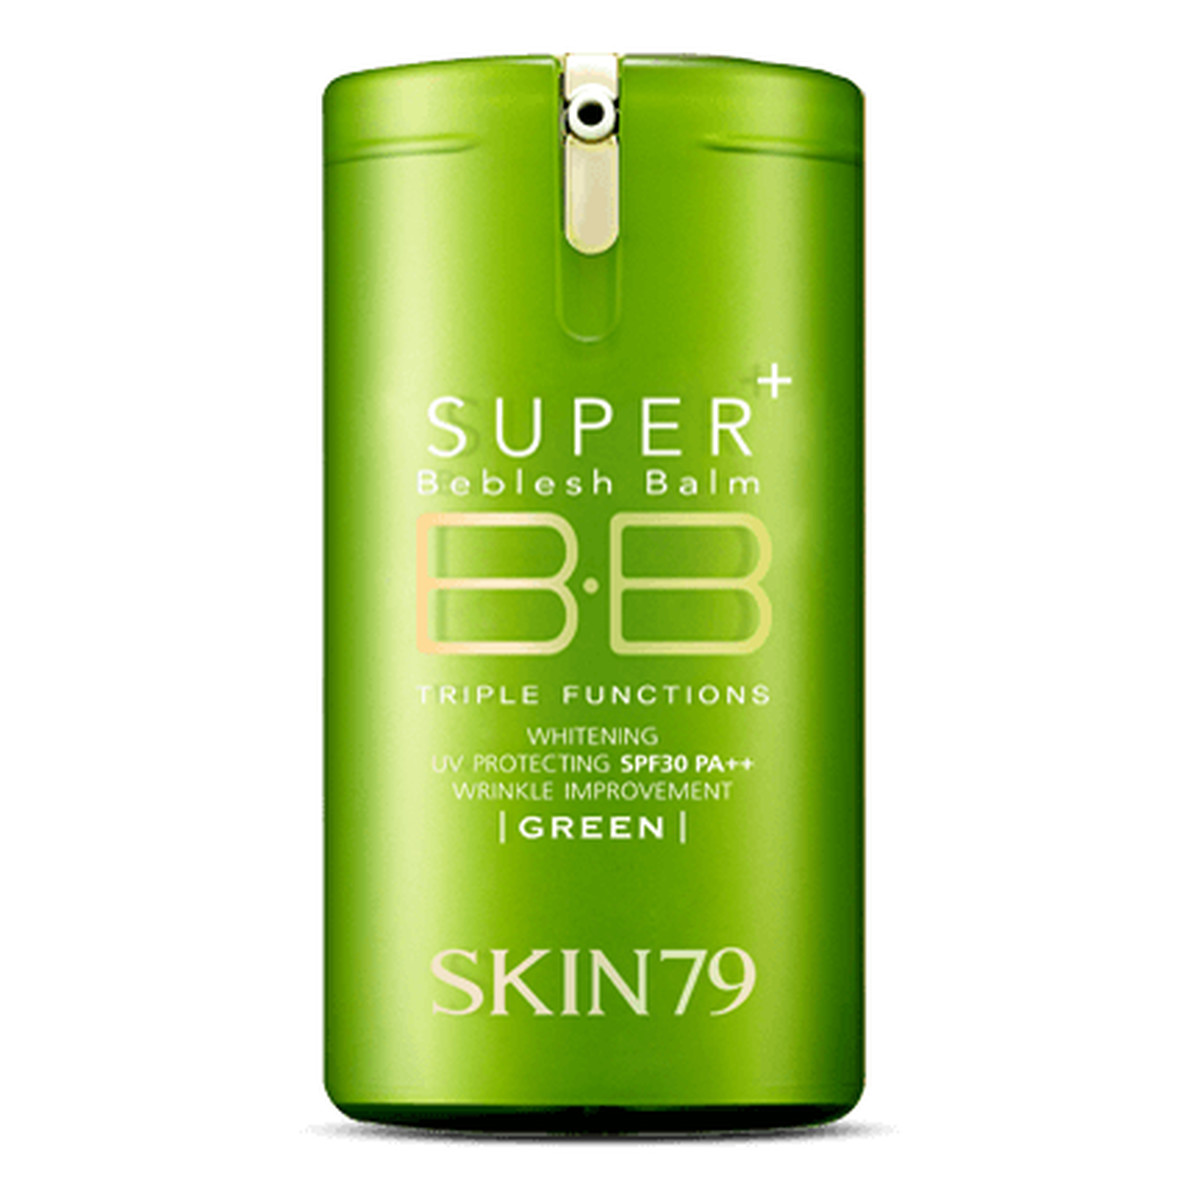 Skin79 Super Beblesh Balm Krem BB Plus Triple Functions SPF30 dla cery mieszanej i tłustej Green 40g